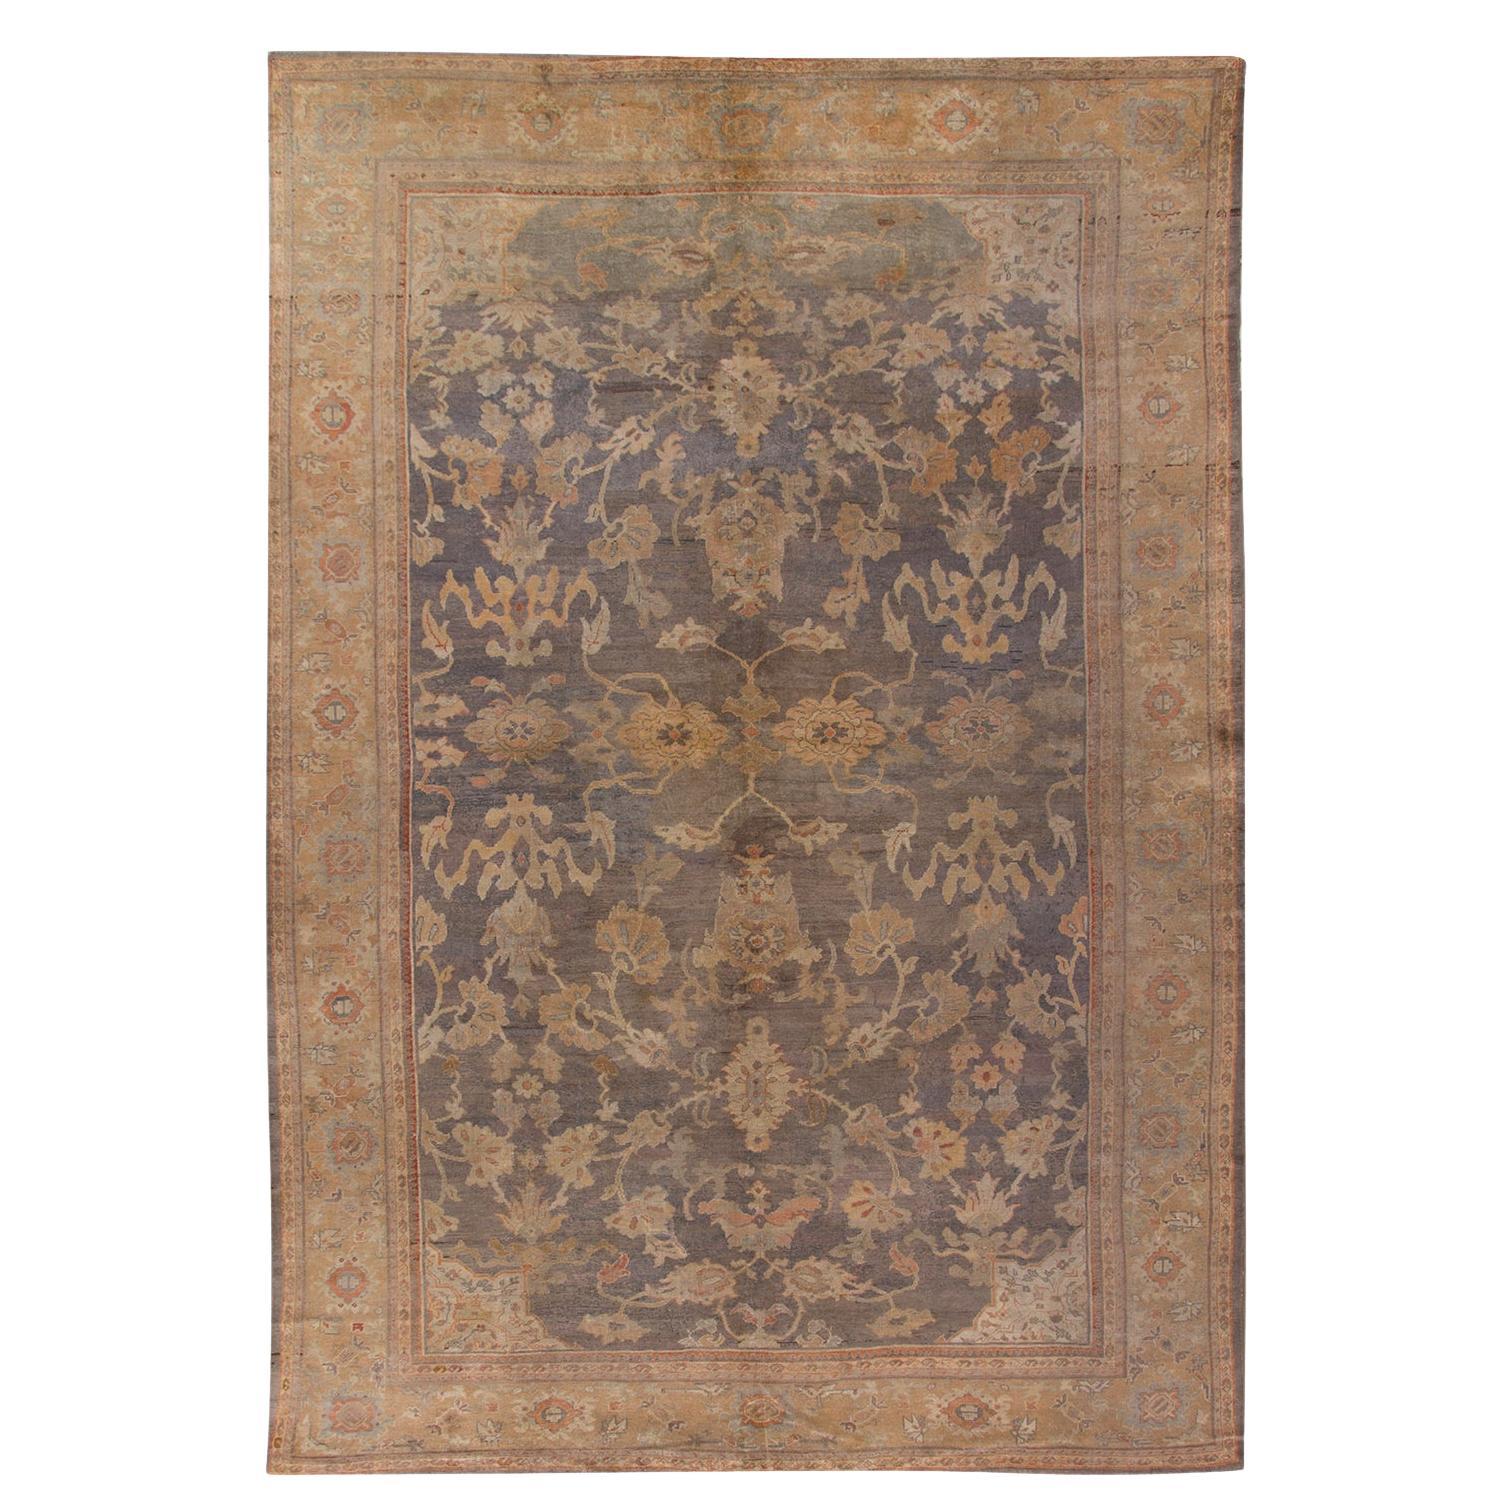 Antique Sultanabad Blue Rug Carpet, 11' x 16'3 For Sale